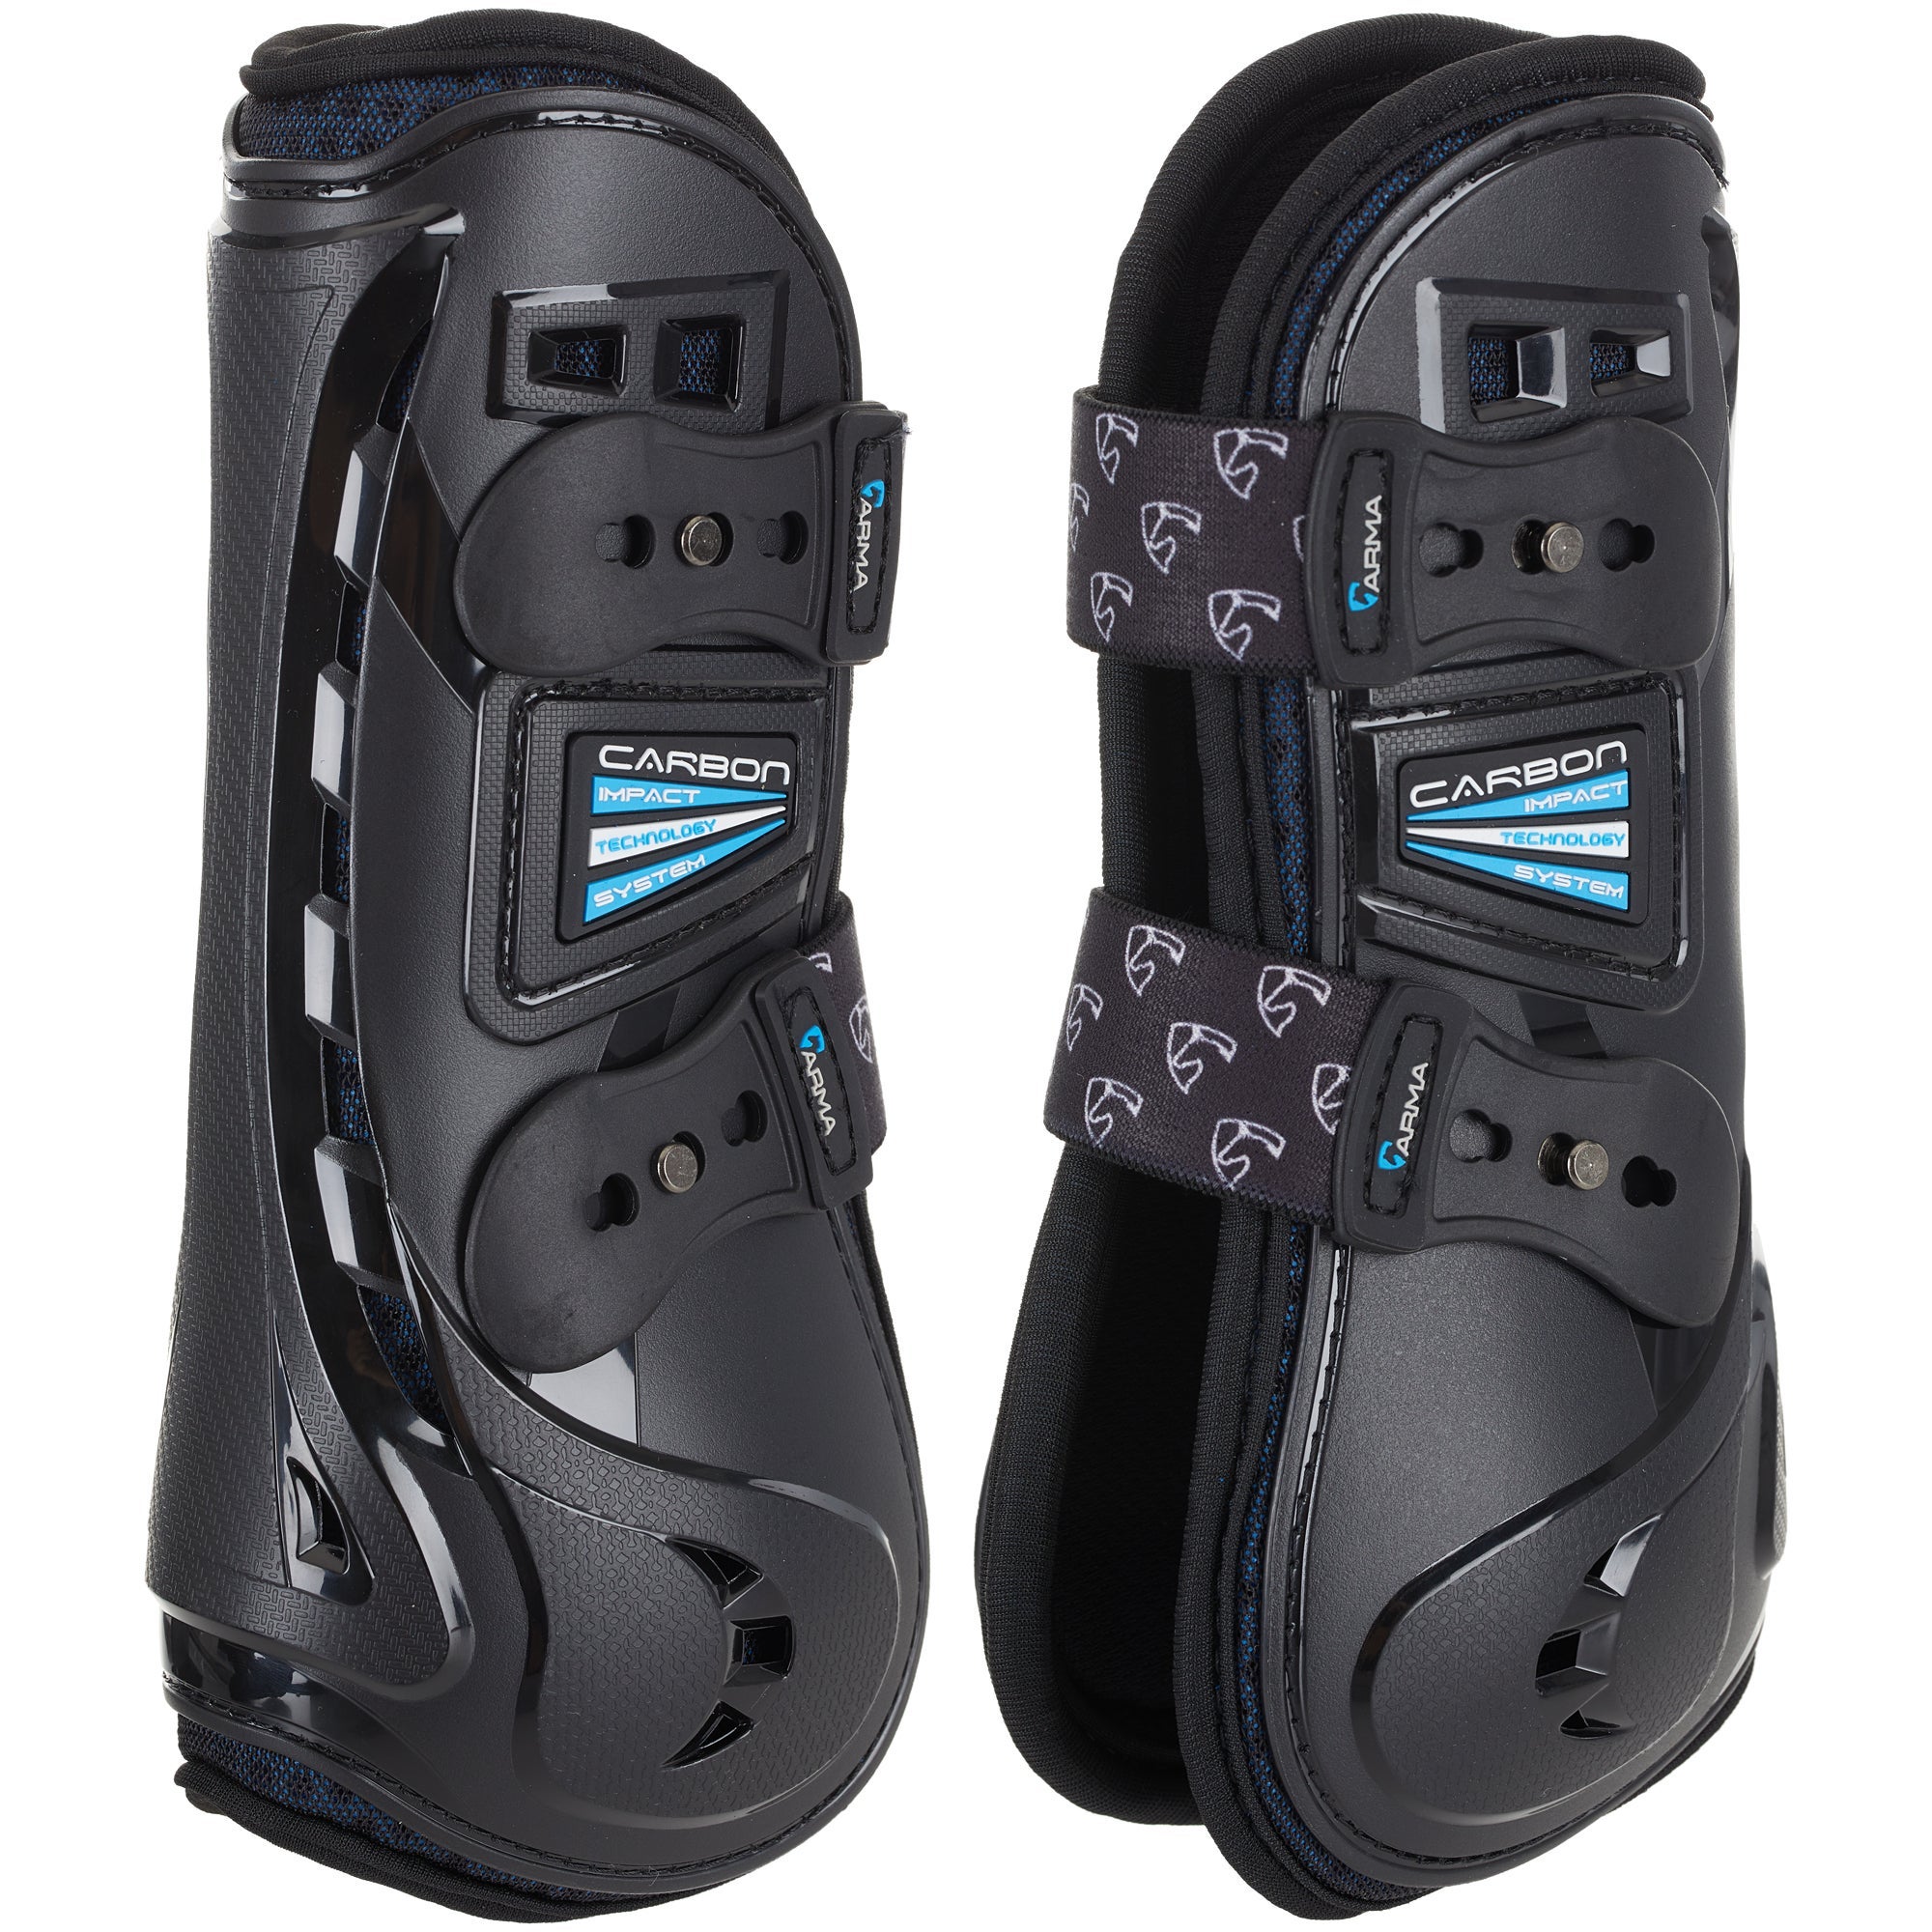 Full ARMA Carbon Tendon Boots Black 